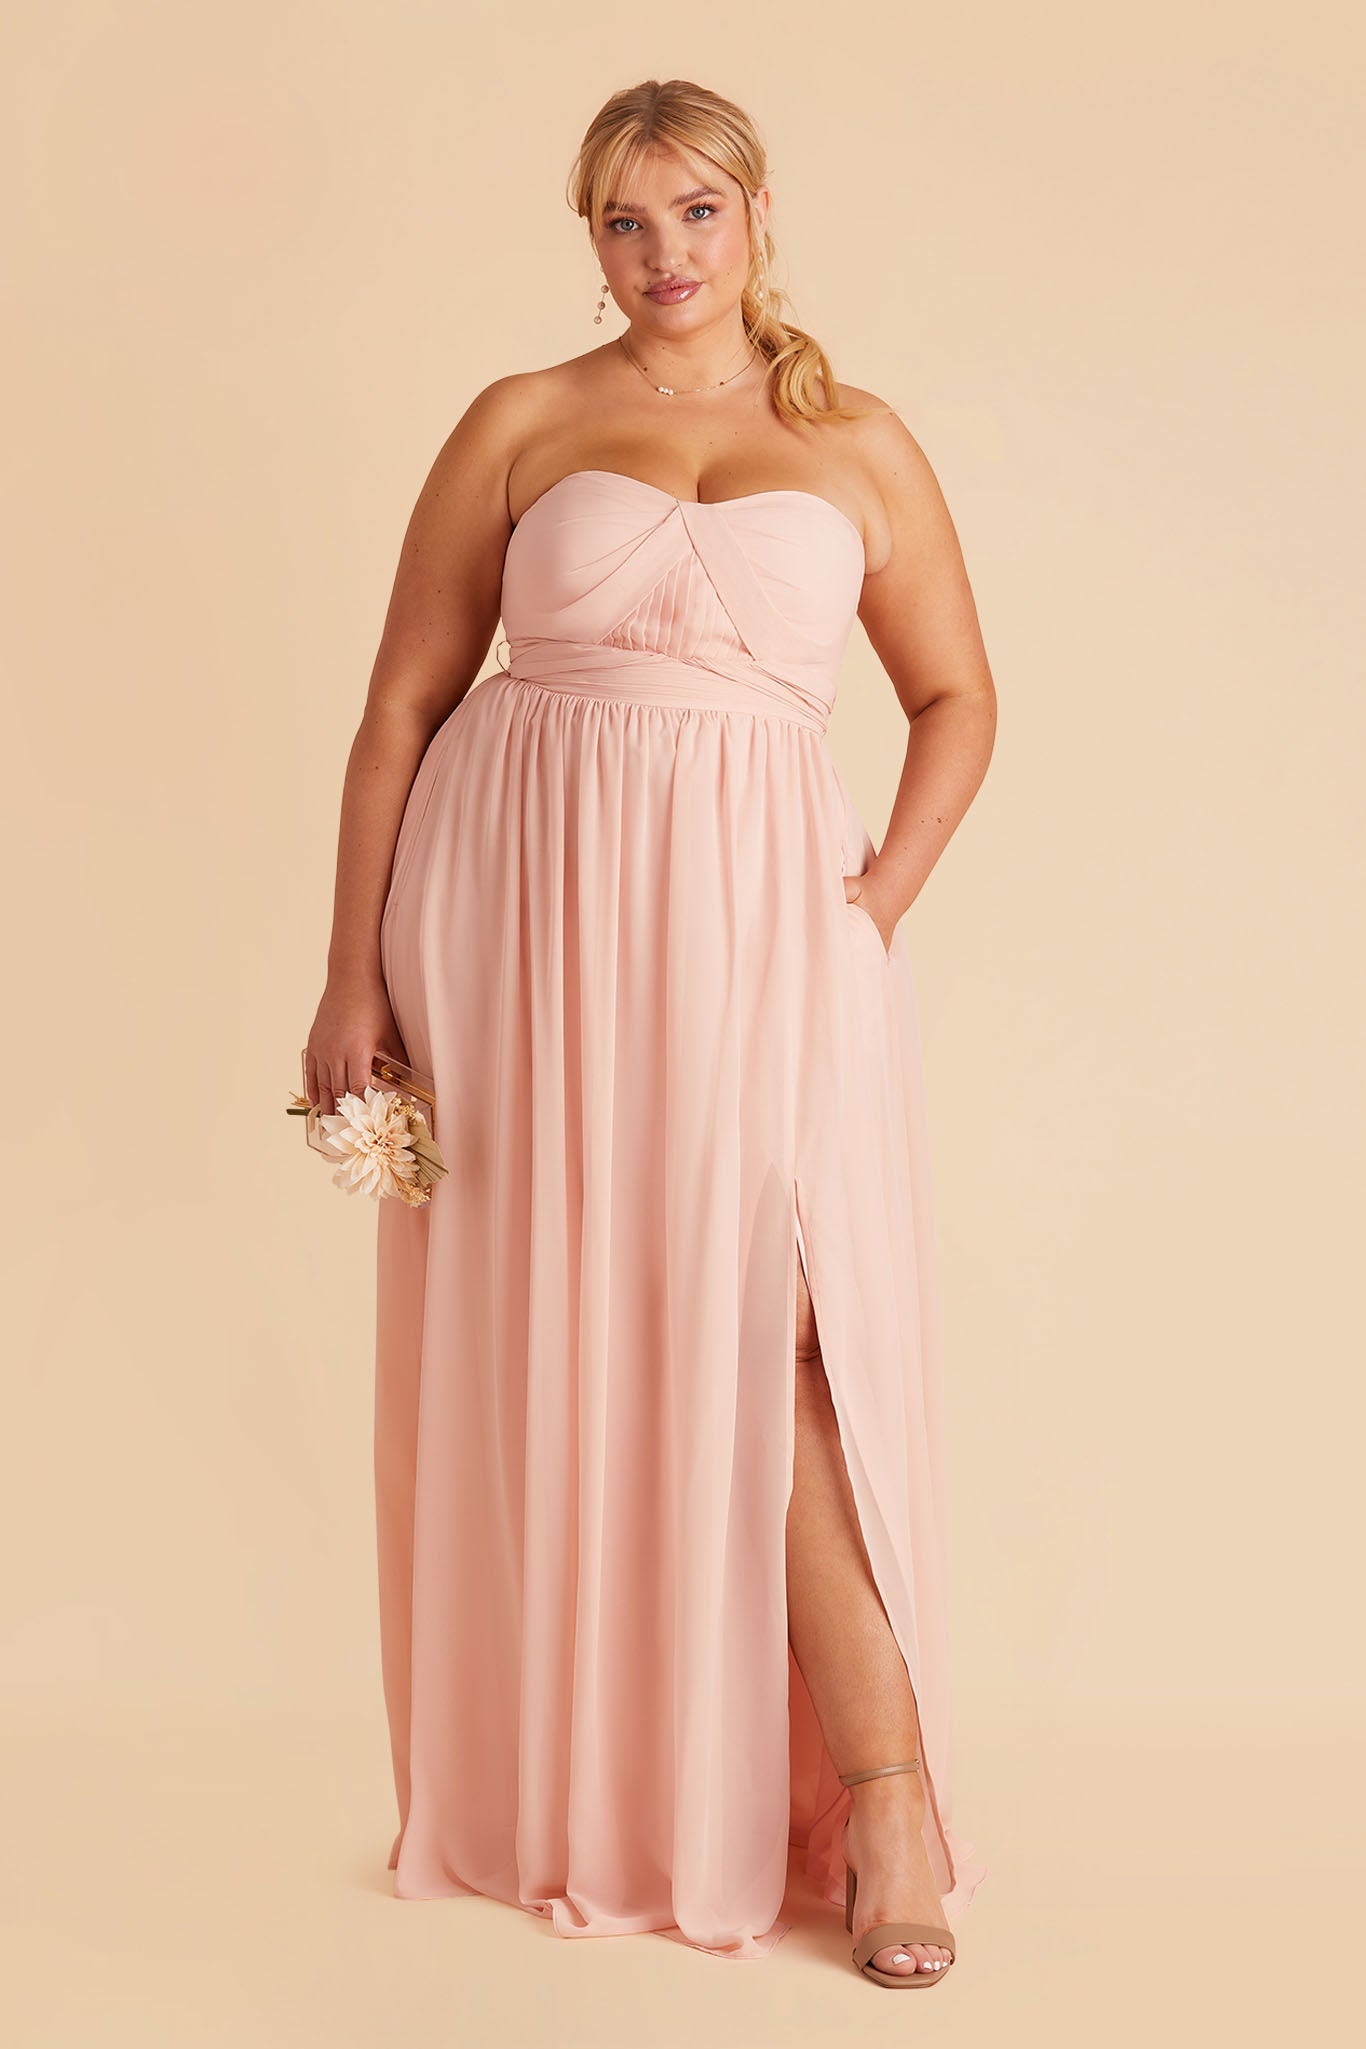 Grace Convertible Chiffon Bridesmaid Dress with Slit in Blush Pink